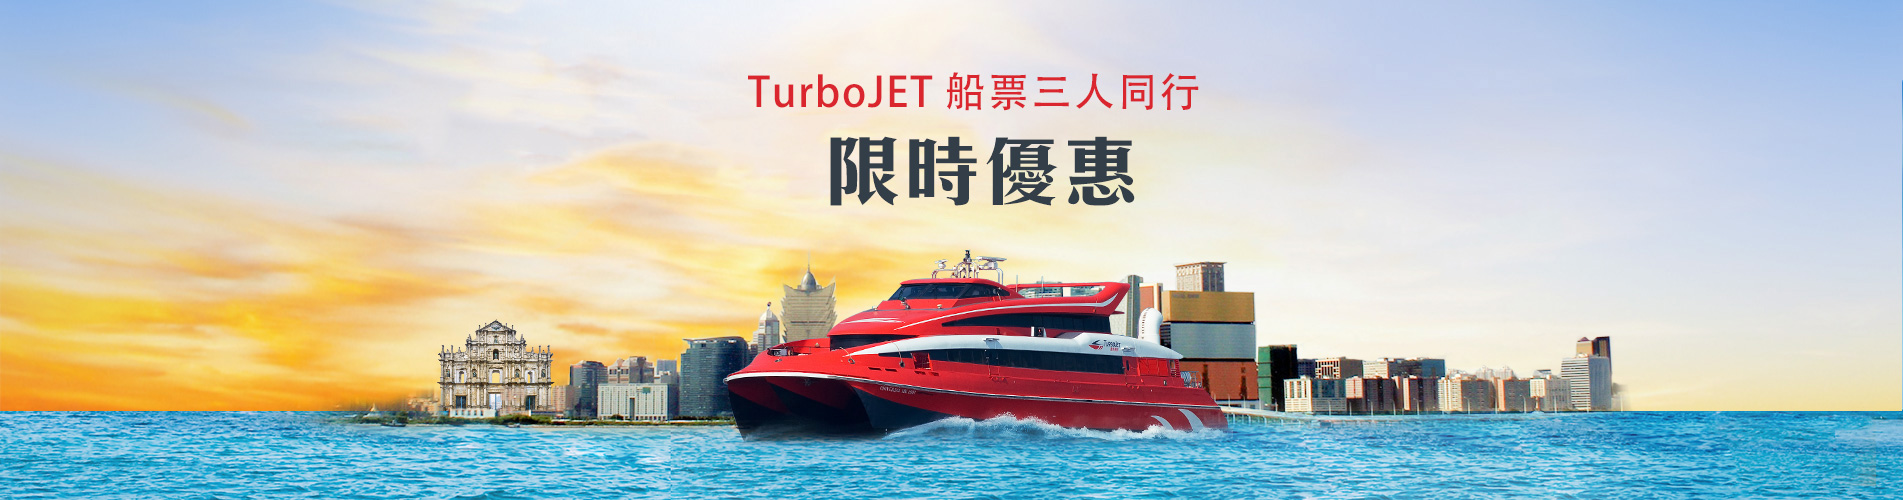 TurboJet澳門船票「三人同行」優惠